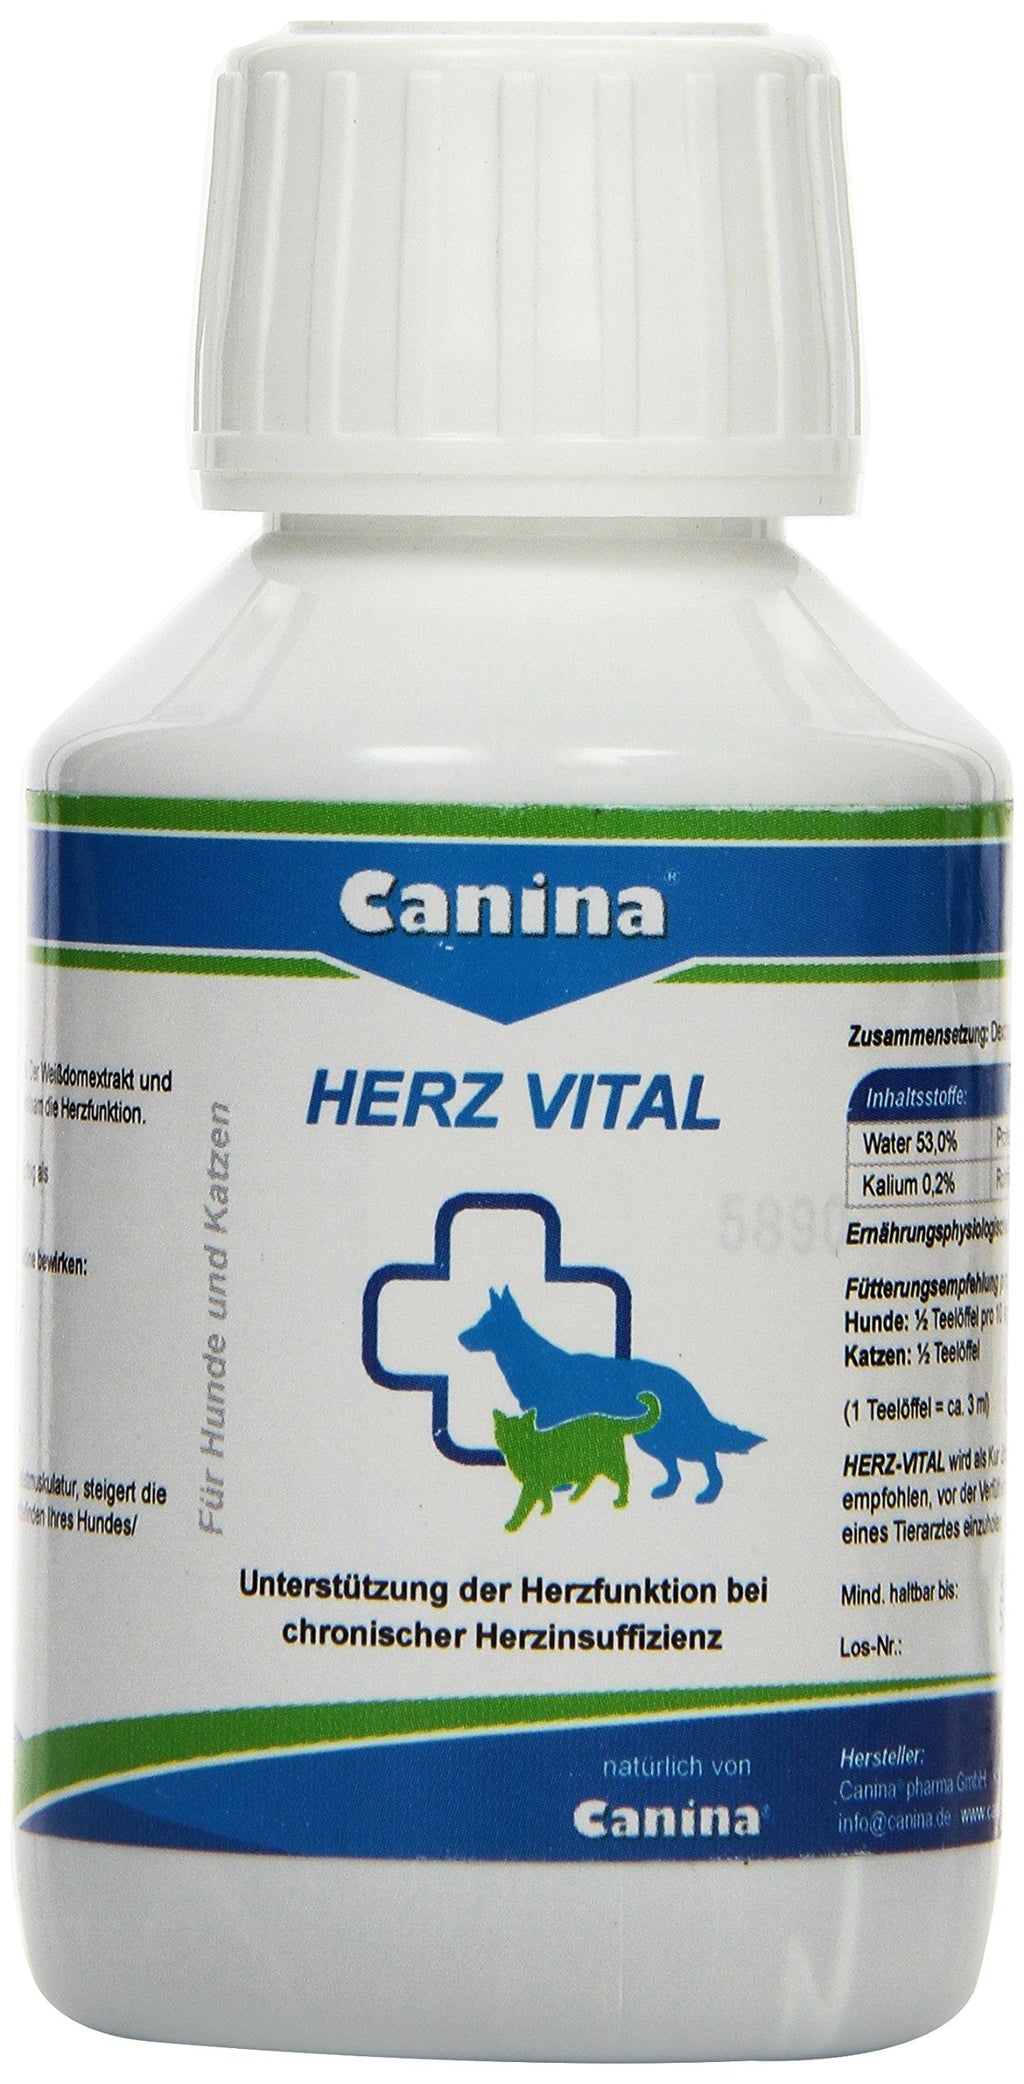 Canina Herz-Vital, pack of 1 (1 x 0.1 kg), brownish/yellowish, 100 g (pack of 1) - PawsPlanet Australia